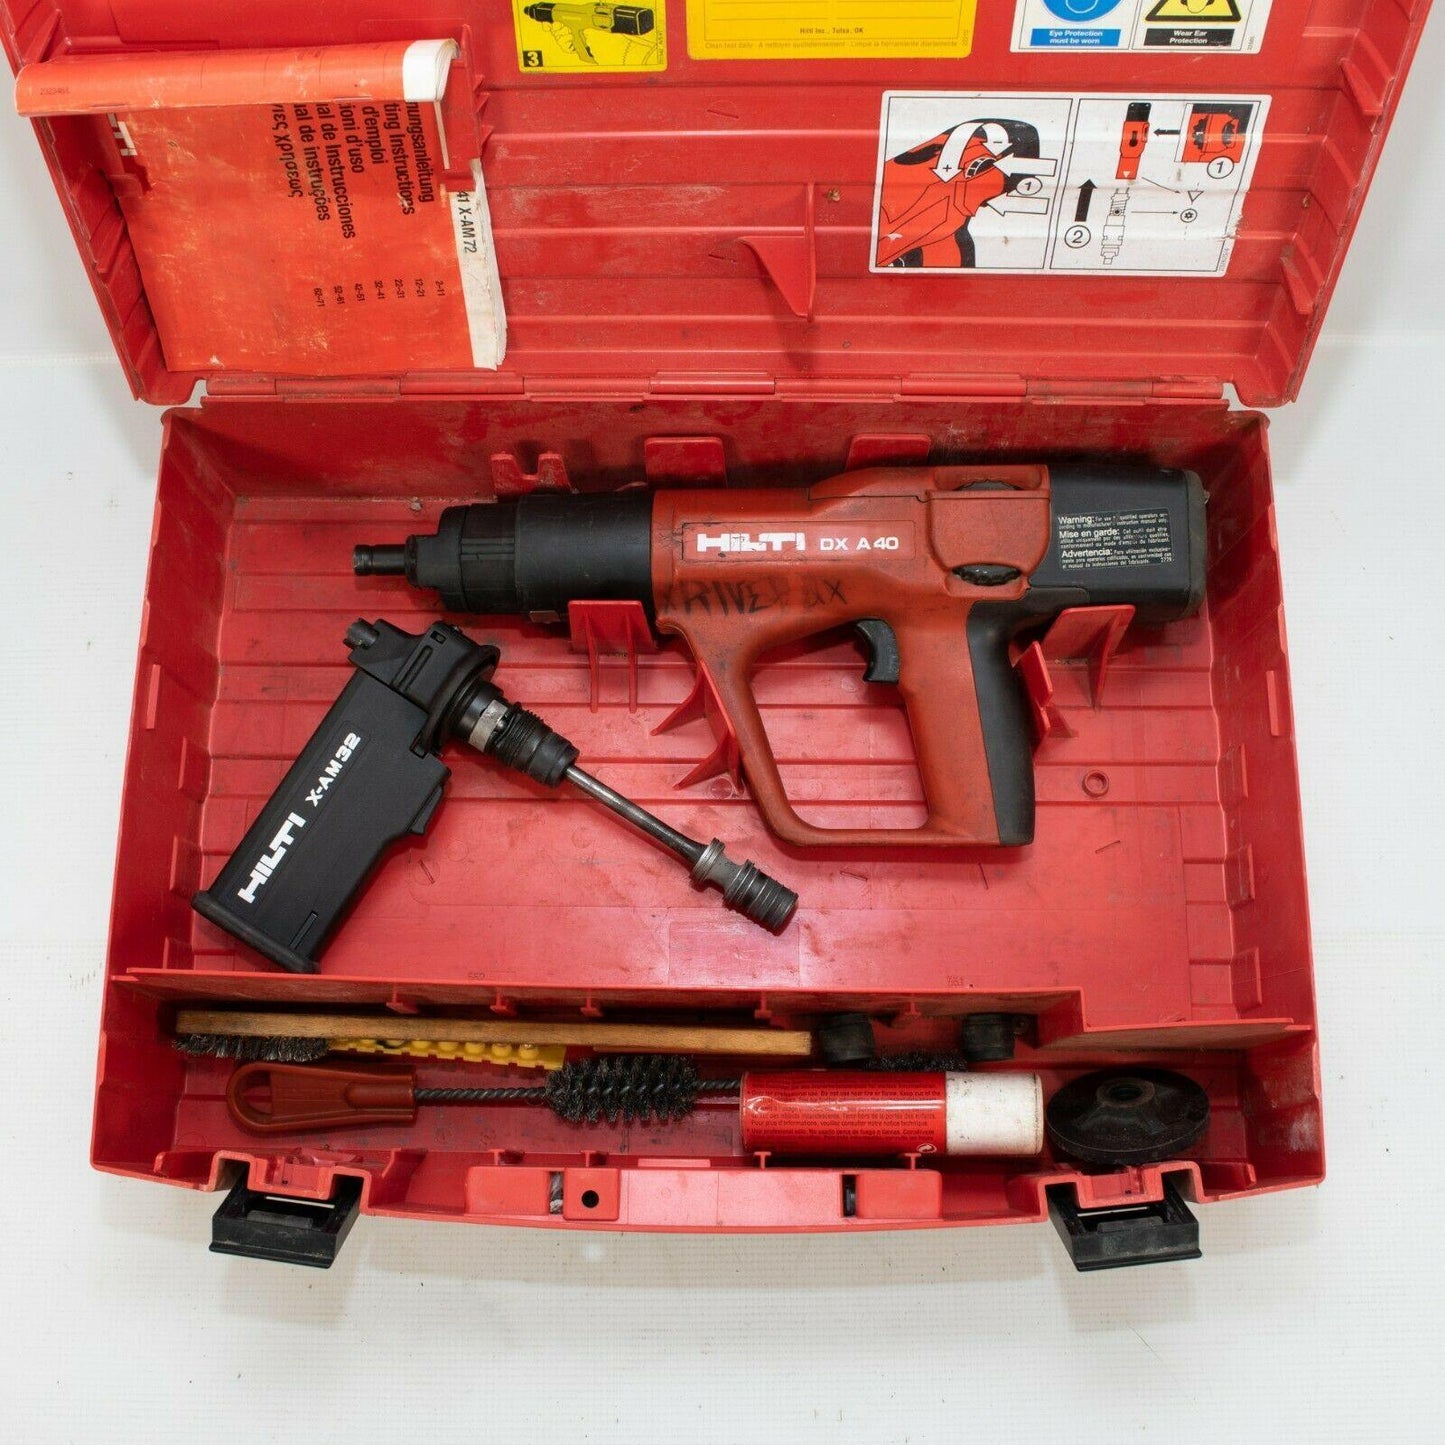 Hilti DX A40 Powder Actuated Concrete Gun w/ X-AM32 and case - ipawnishop.com